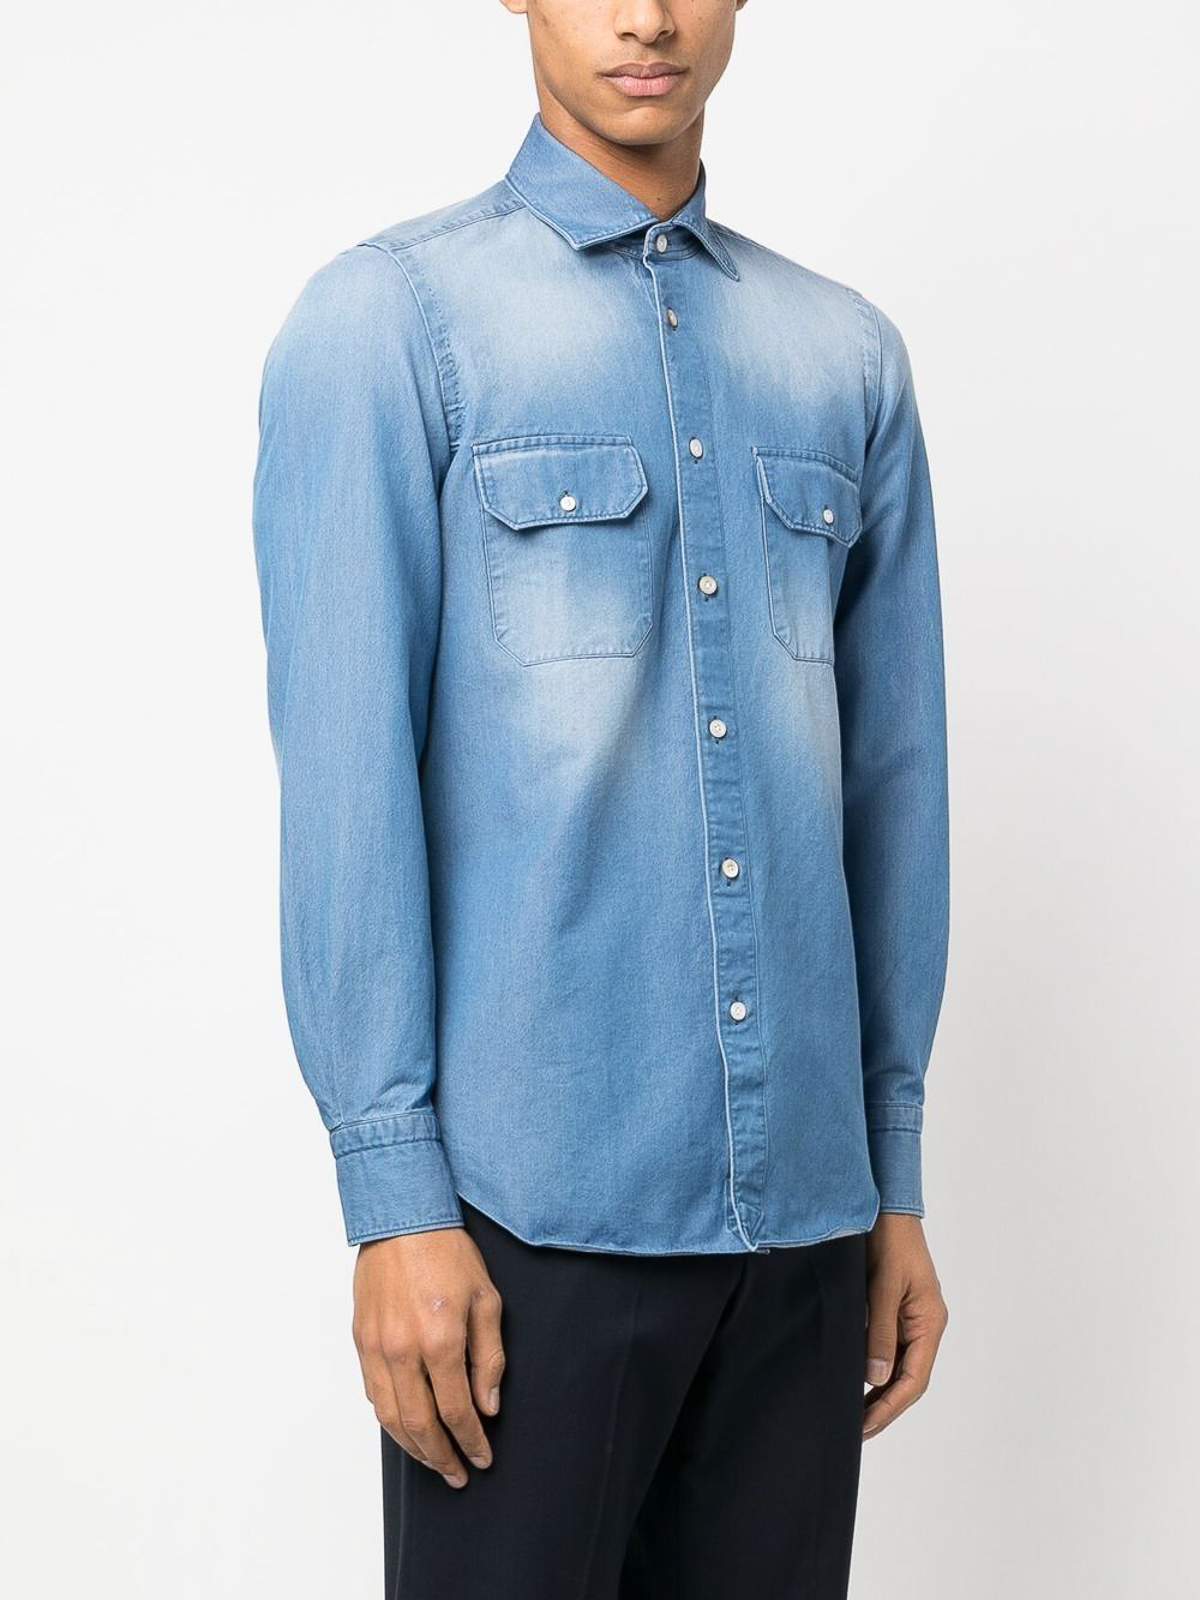 KENZO 'monogram' Denim Cowboy Shirt in Blue for Men